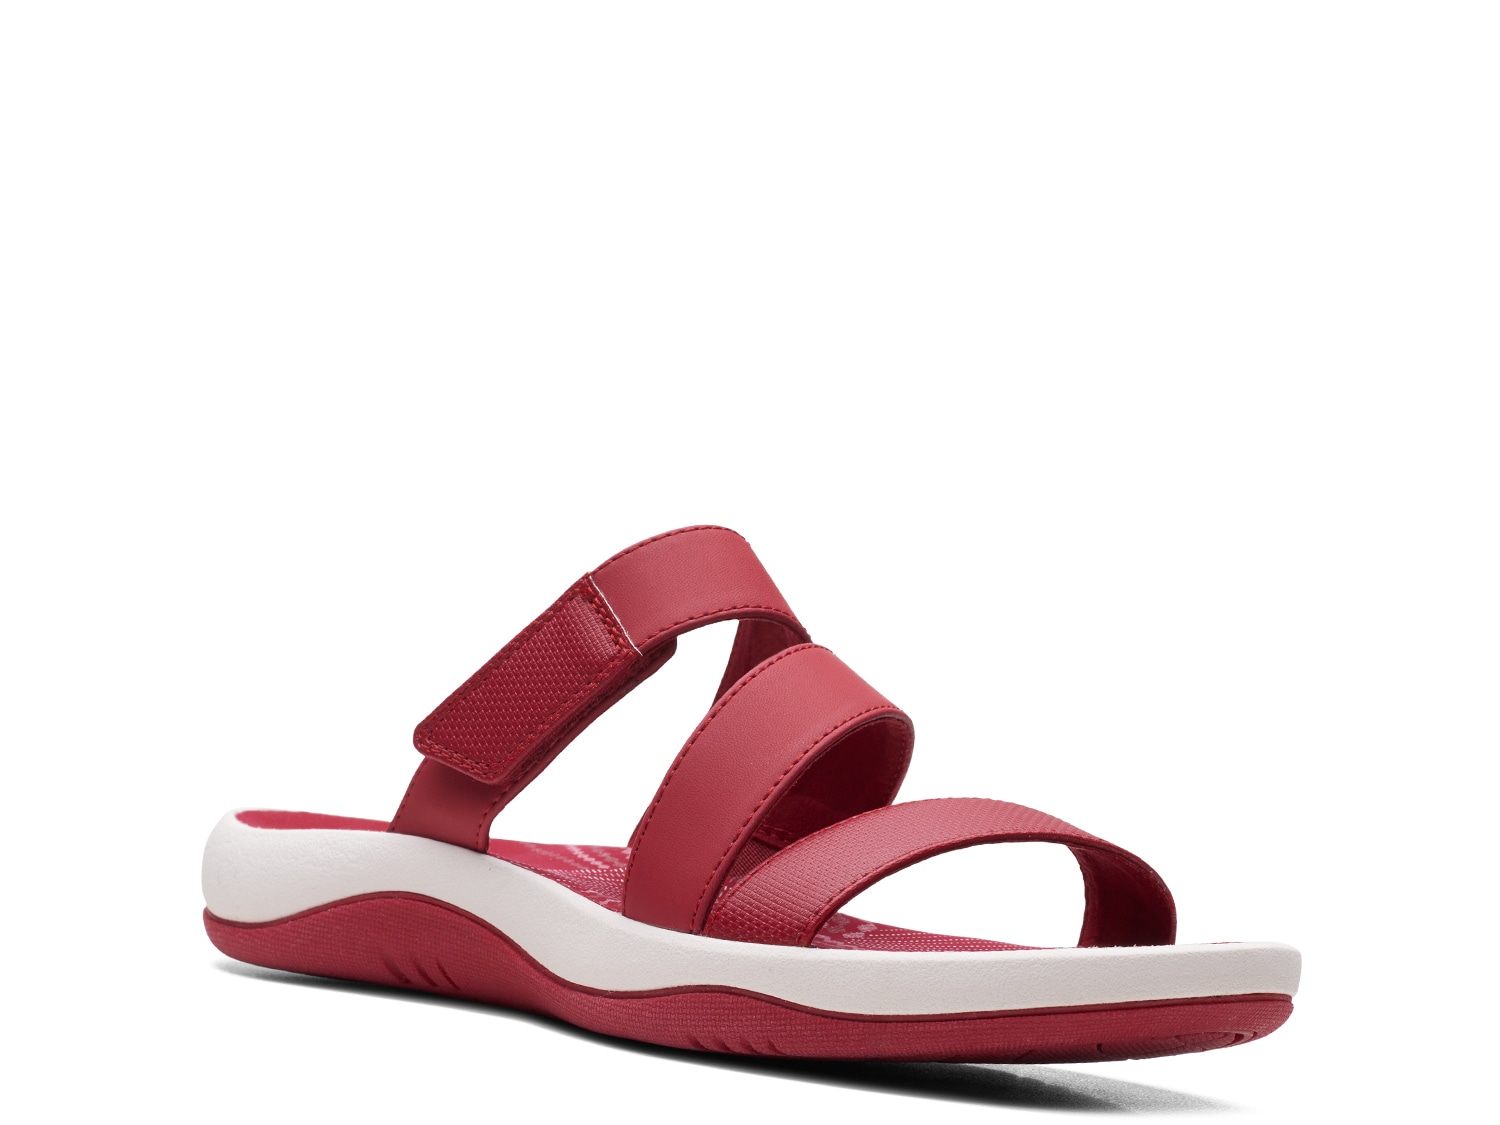 clarks womens sandals online